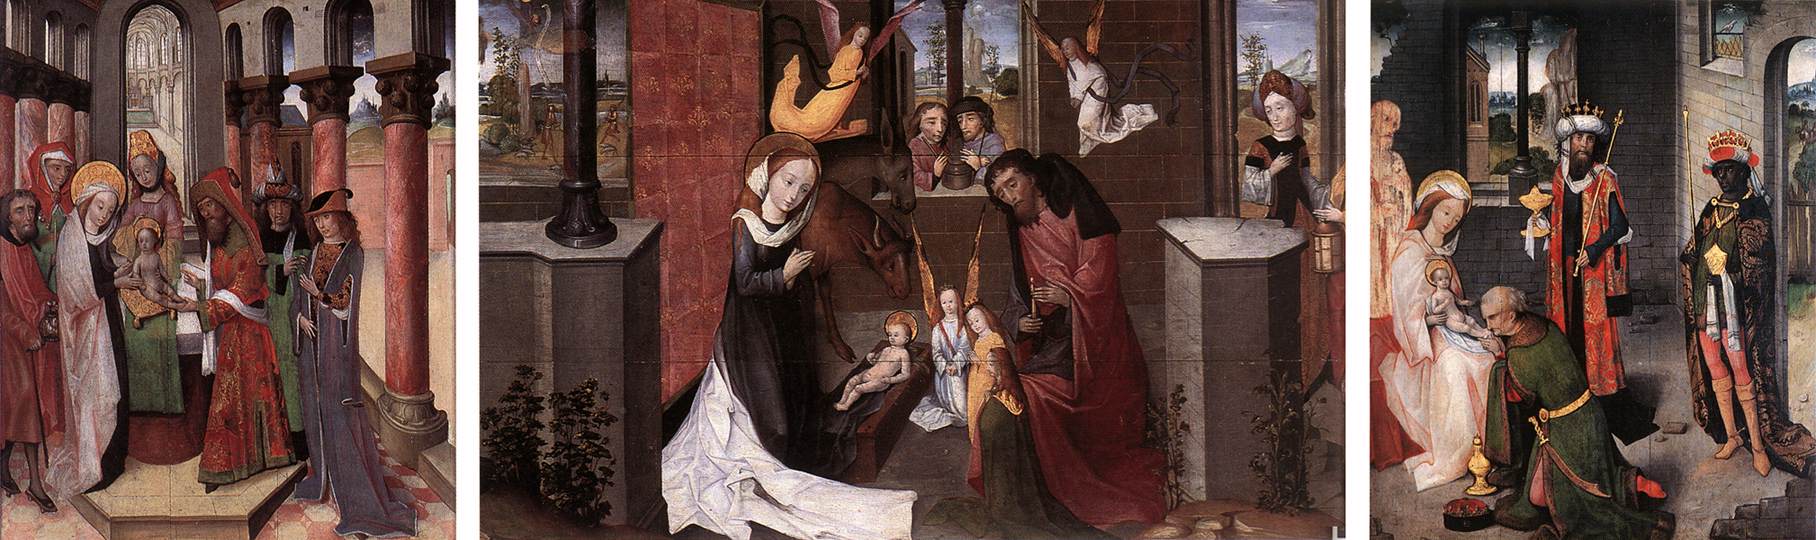 Triptychon mit Szenen des Lebens Christi